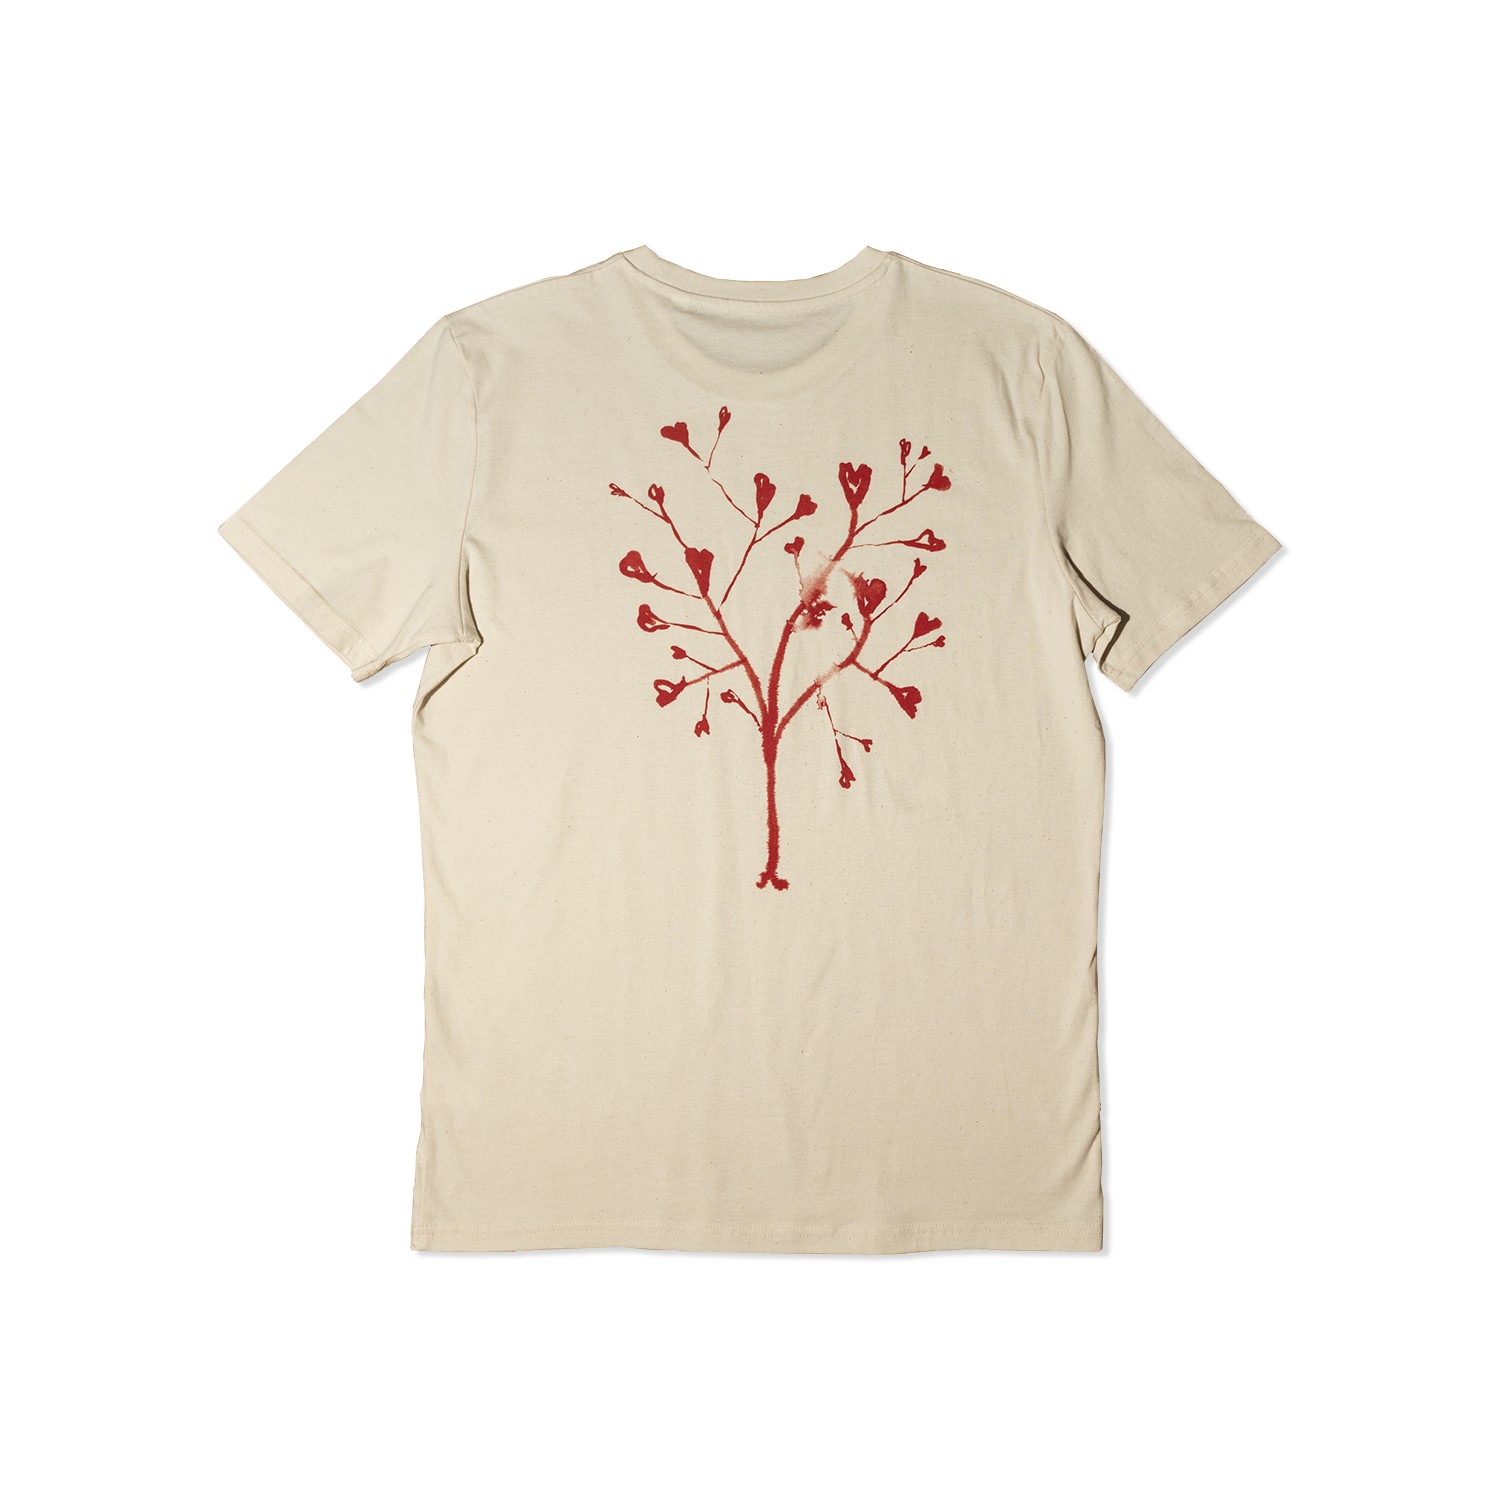 BRANDÃO FABER HUNGER - T-Shirt Hearts Tree - Small, Natural Raw